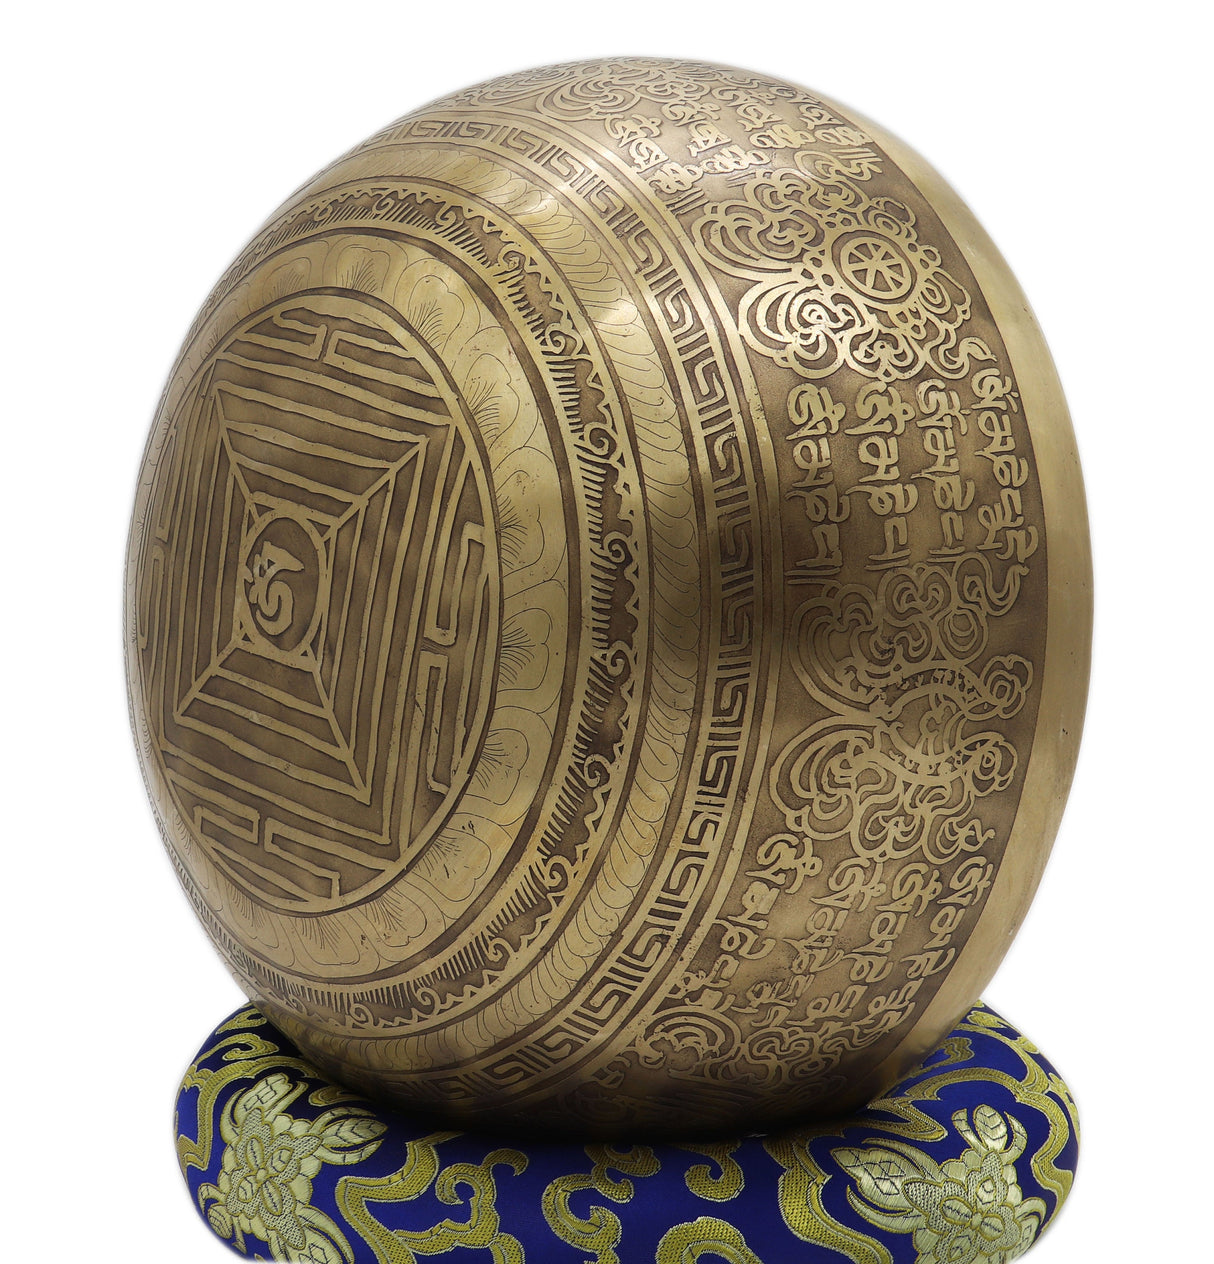 10" Tibetan Singing Bowl Carved with Green Tara and Mantra - Khusi 